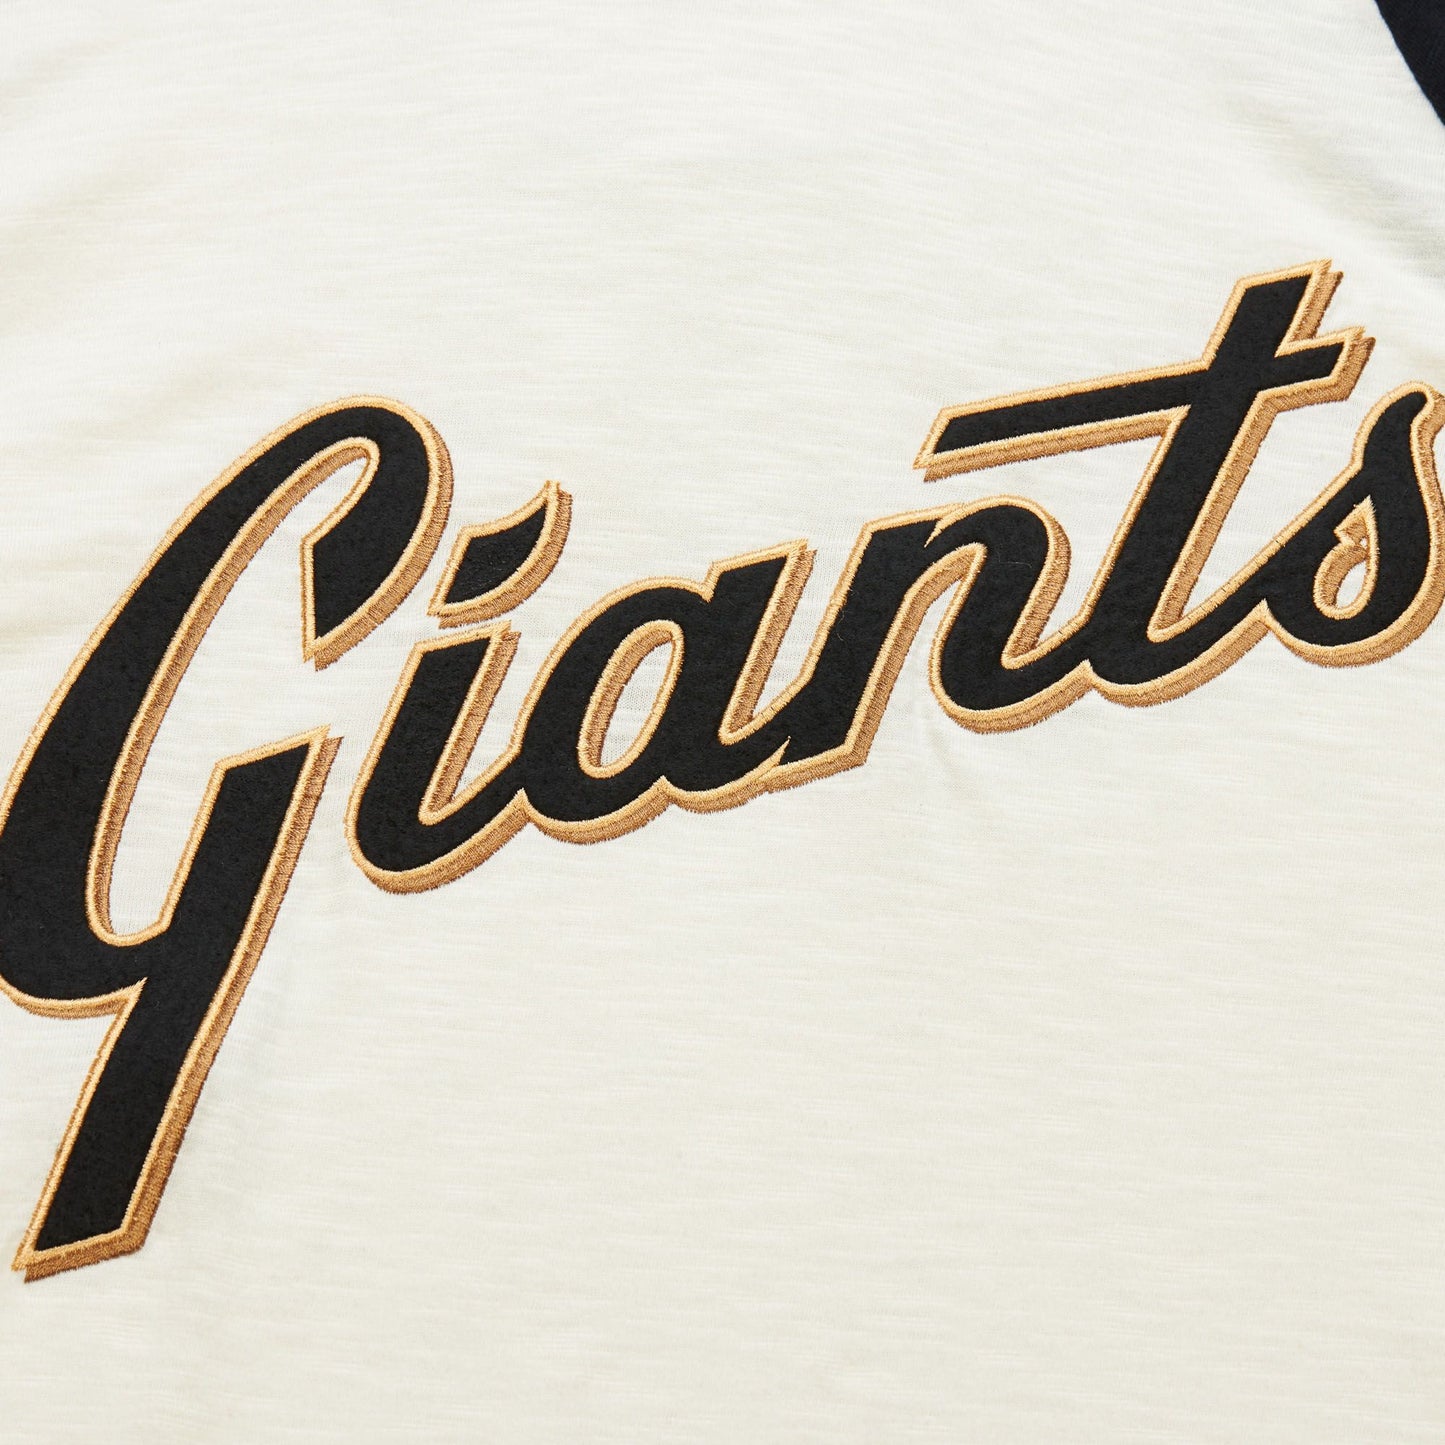 Legendary Slub LS Current Logo San Francisco Giants Mitchell & Ness Long-Sleeve